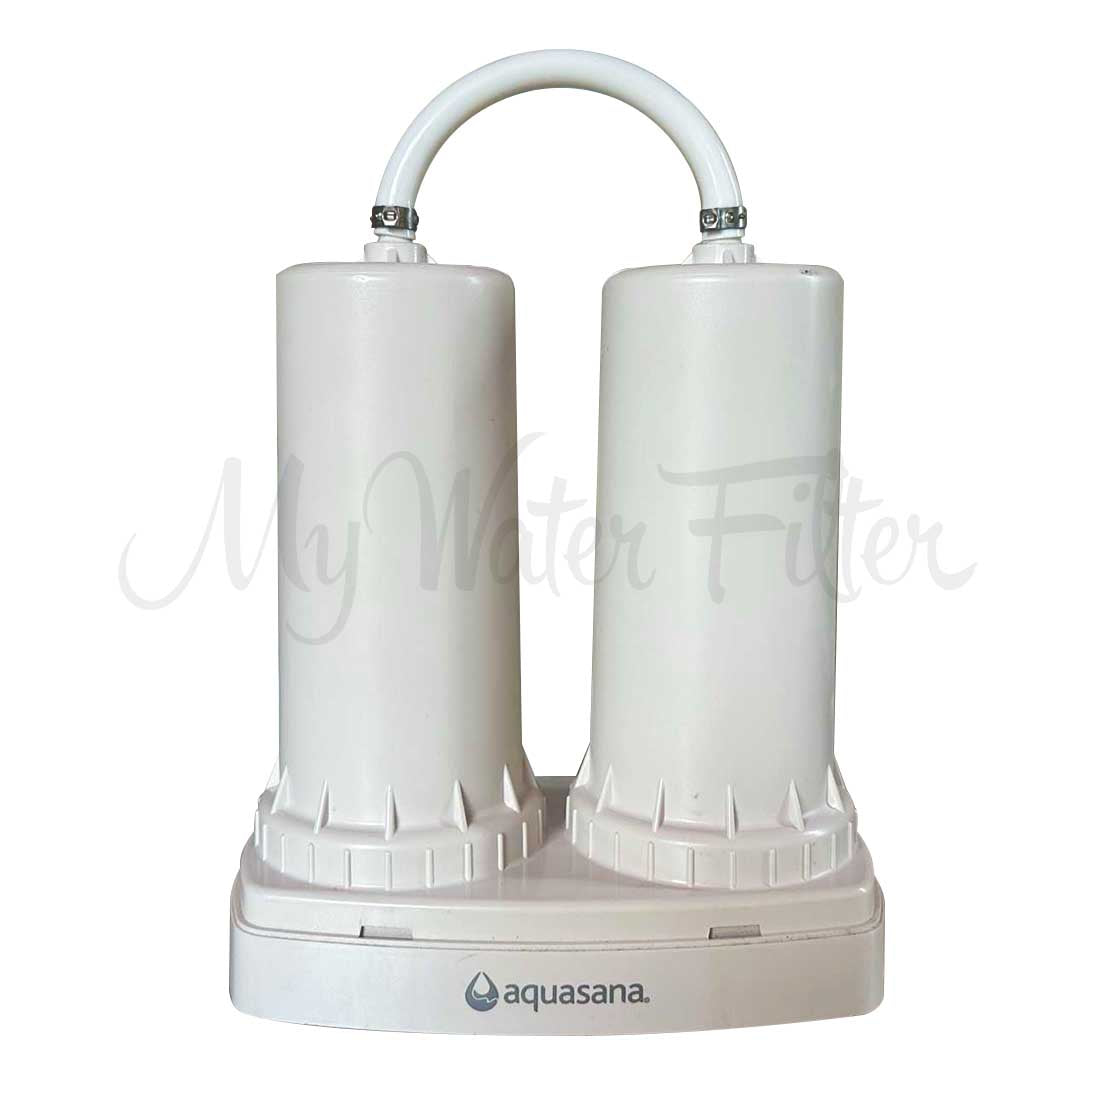 AQ-4000.25 Inner Housing to suit Aquasana Countertop Drinking Water Filter